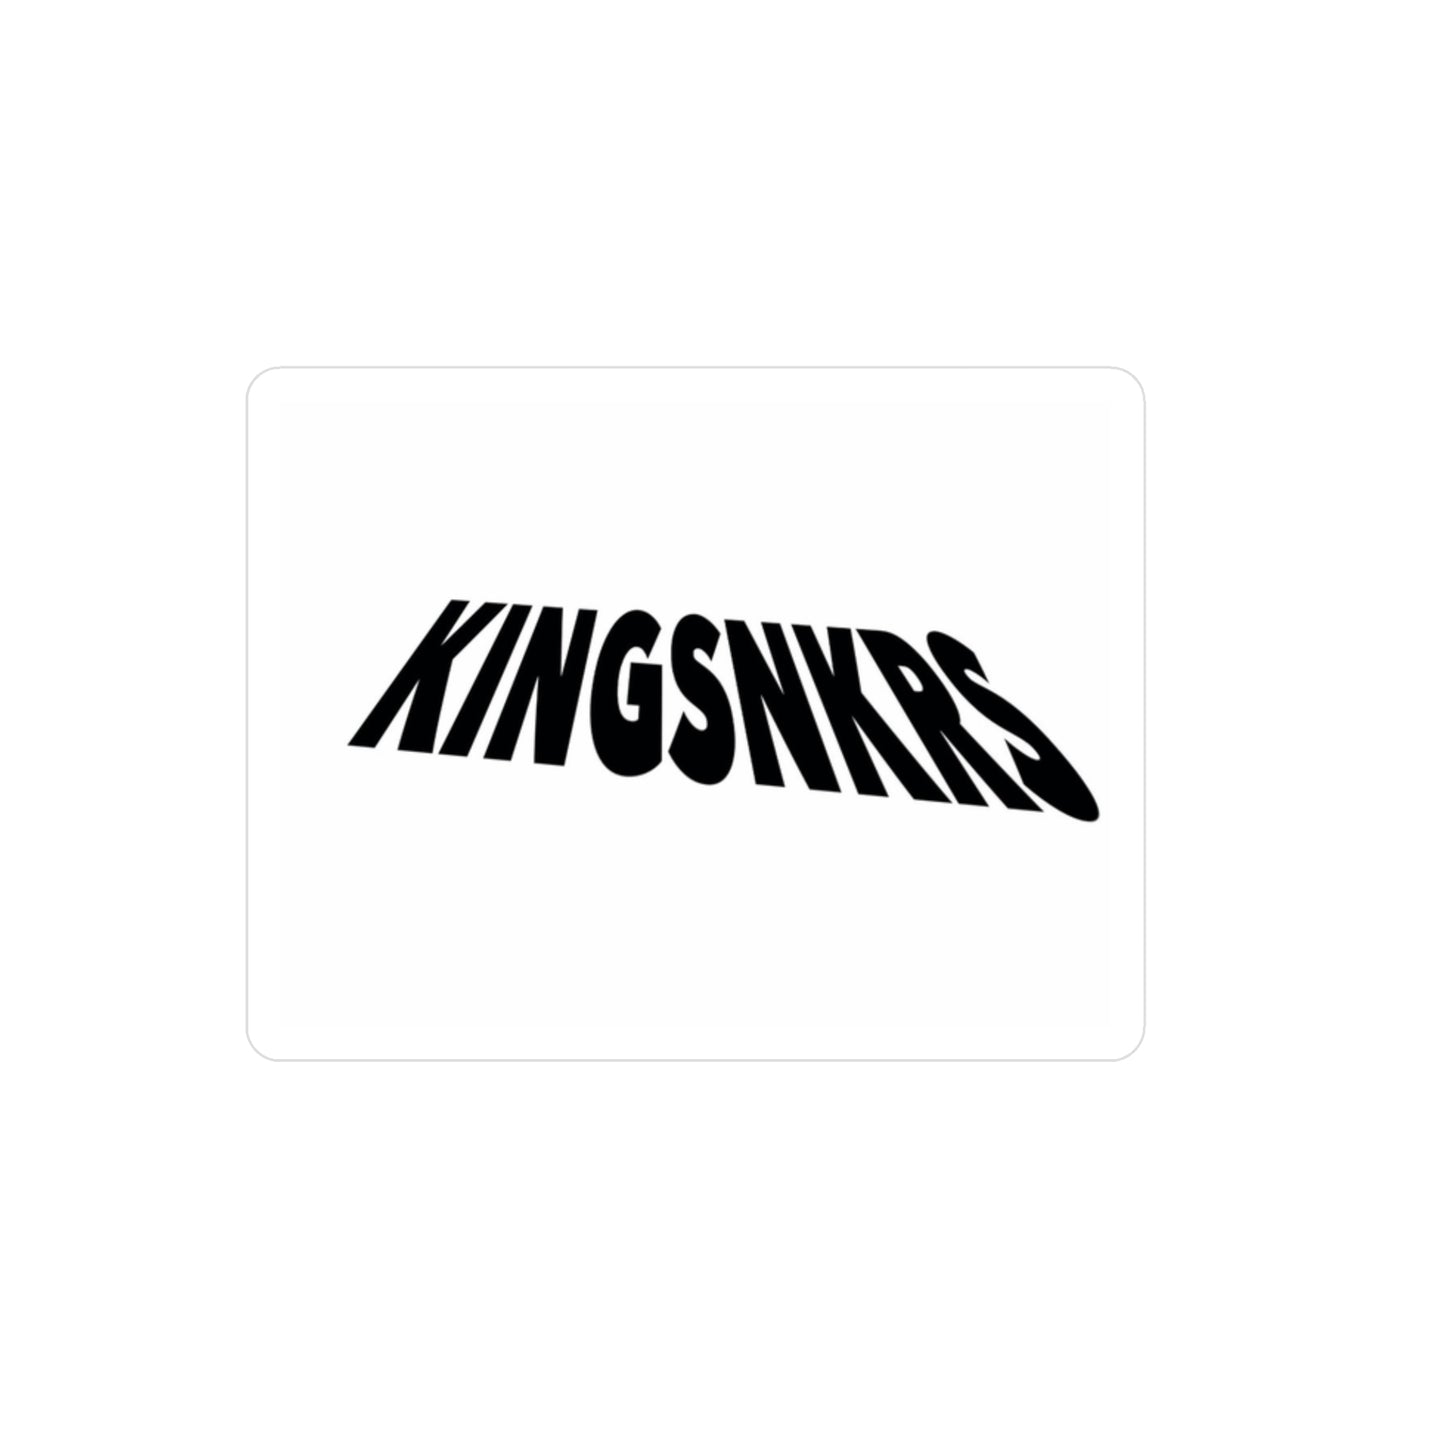 KingSNKRS Sticker